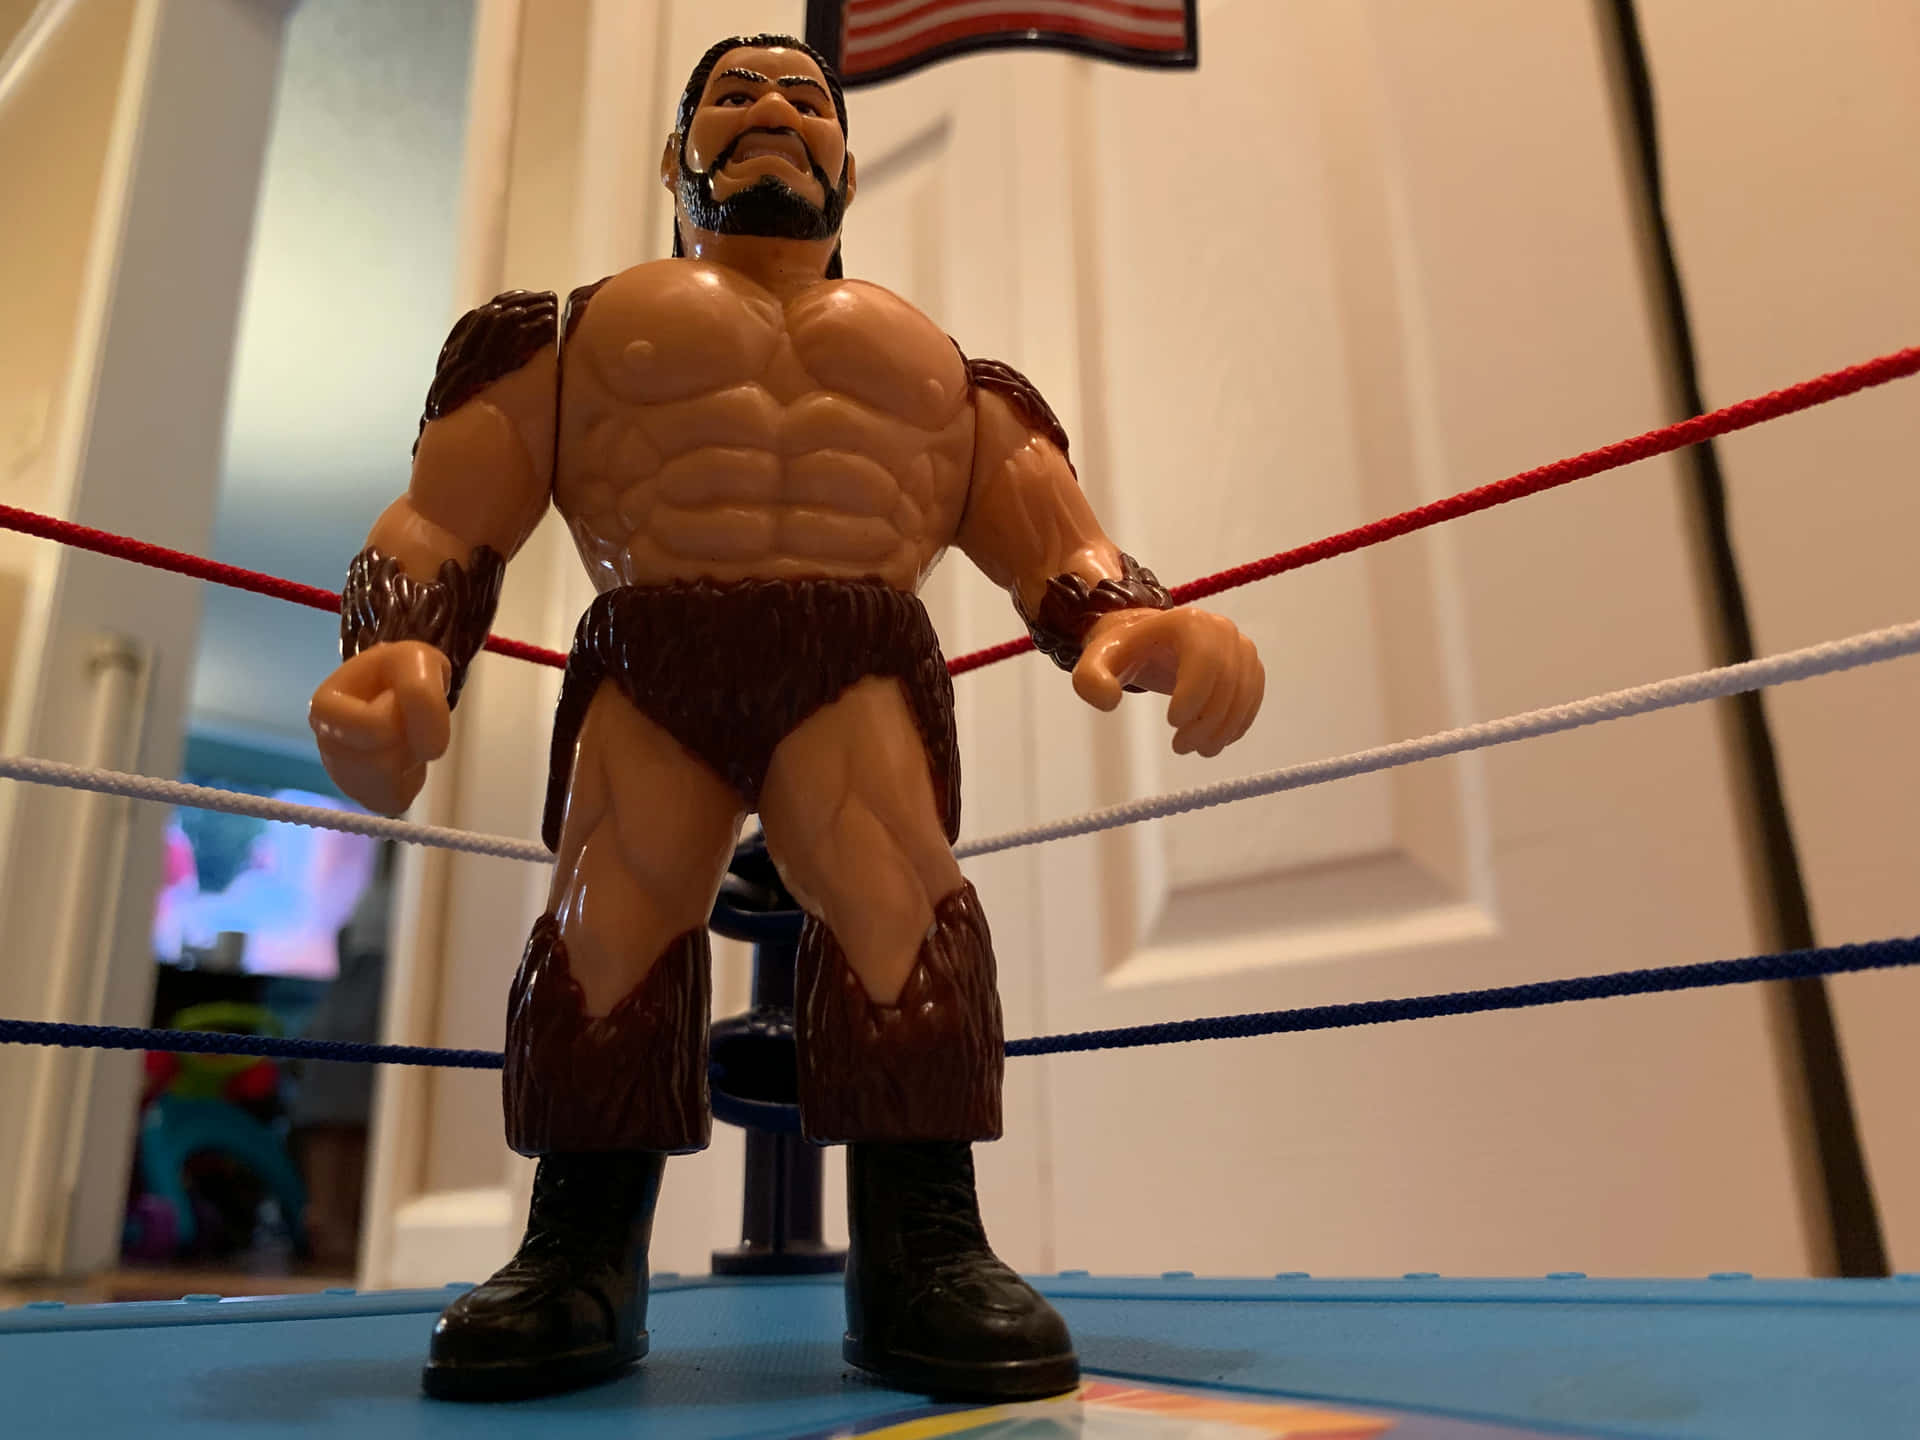 Argentine Professional Wrestler Giant Gonzalez Toy Figure Background